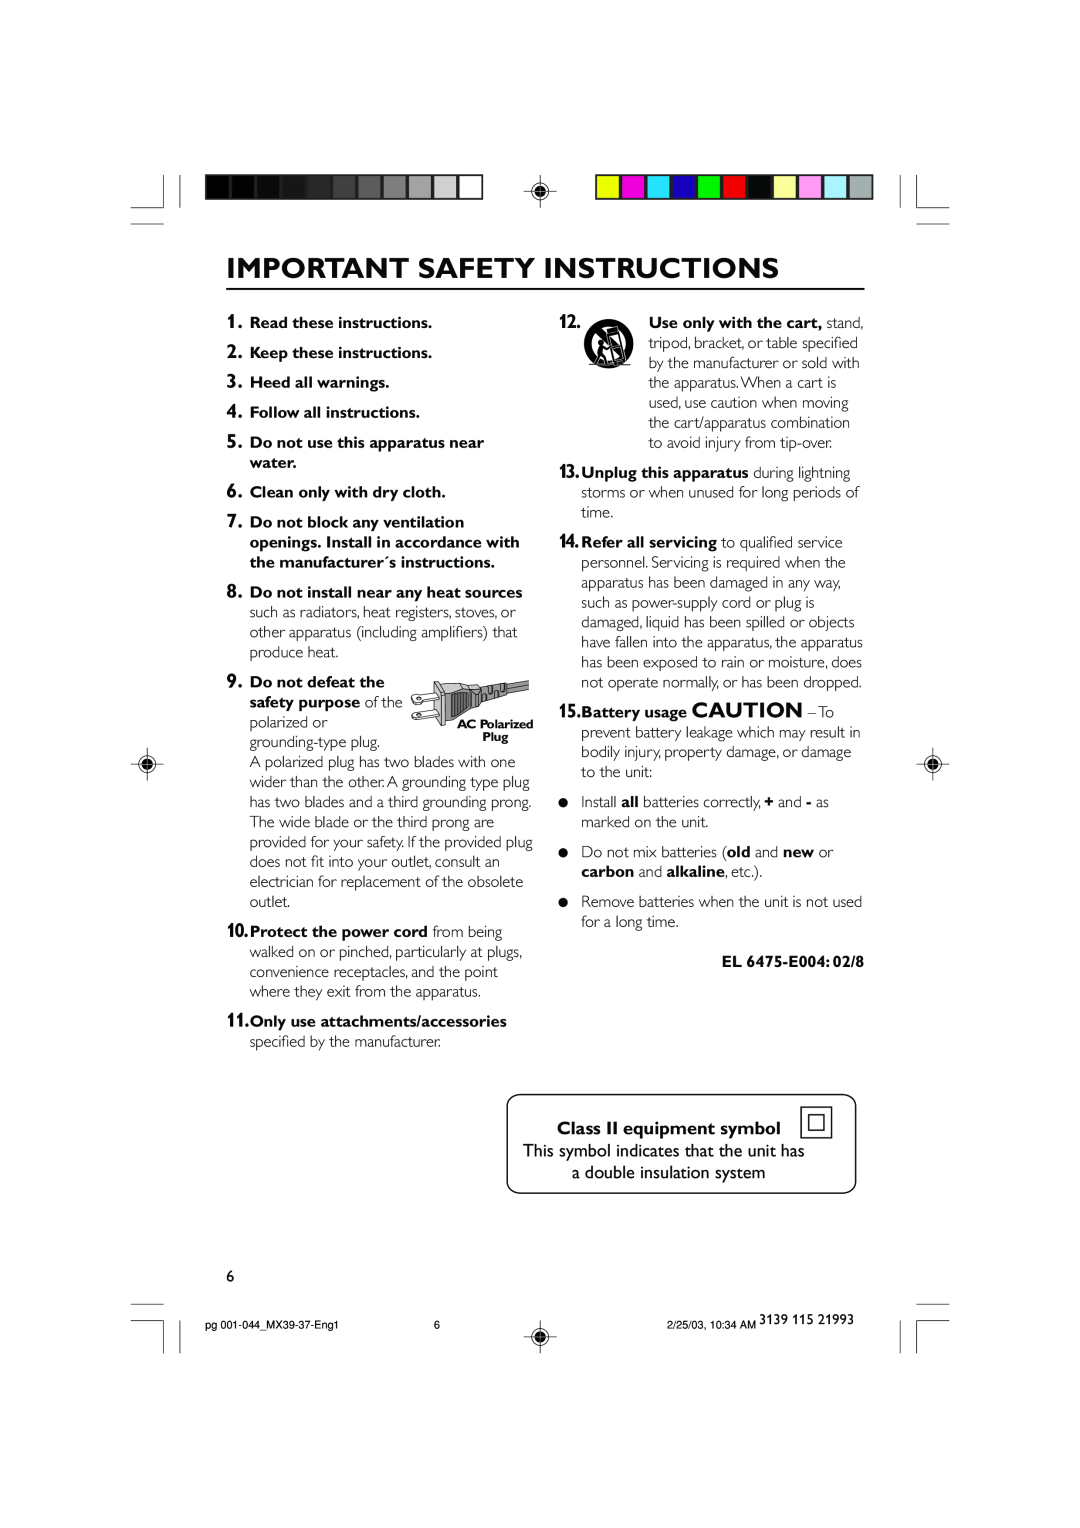 Philips MX3900D, MX3950D warranty Class II equipment symbol, Important Safety Instructions 